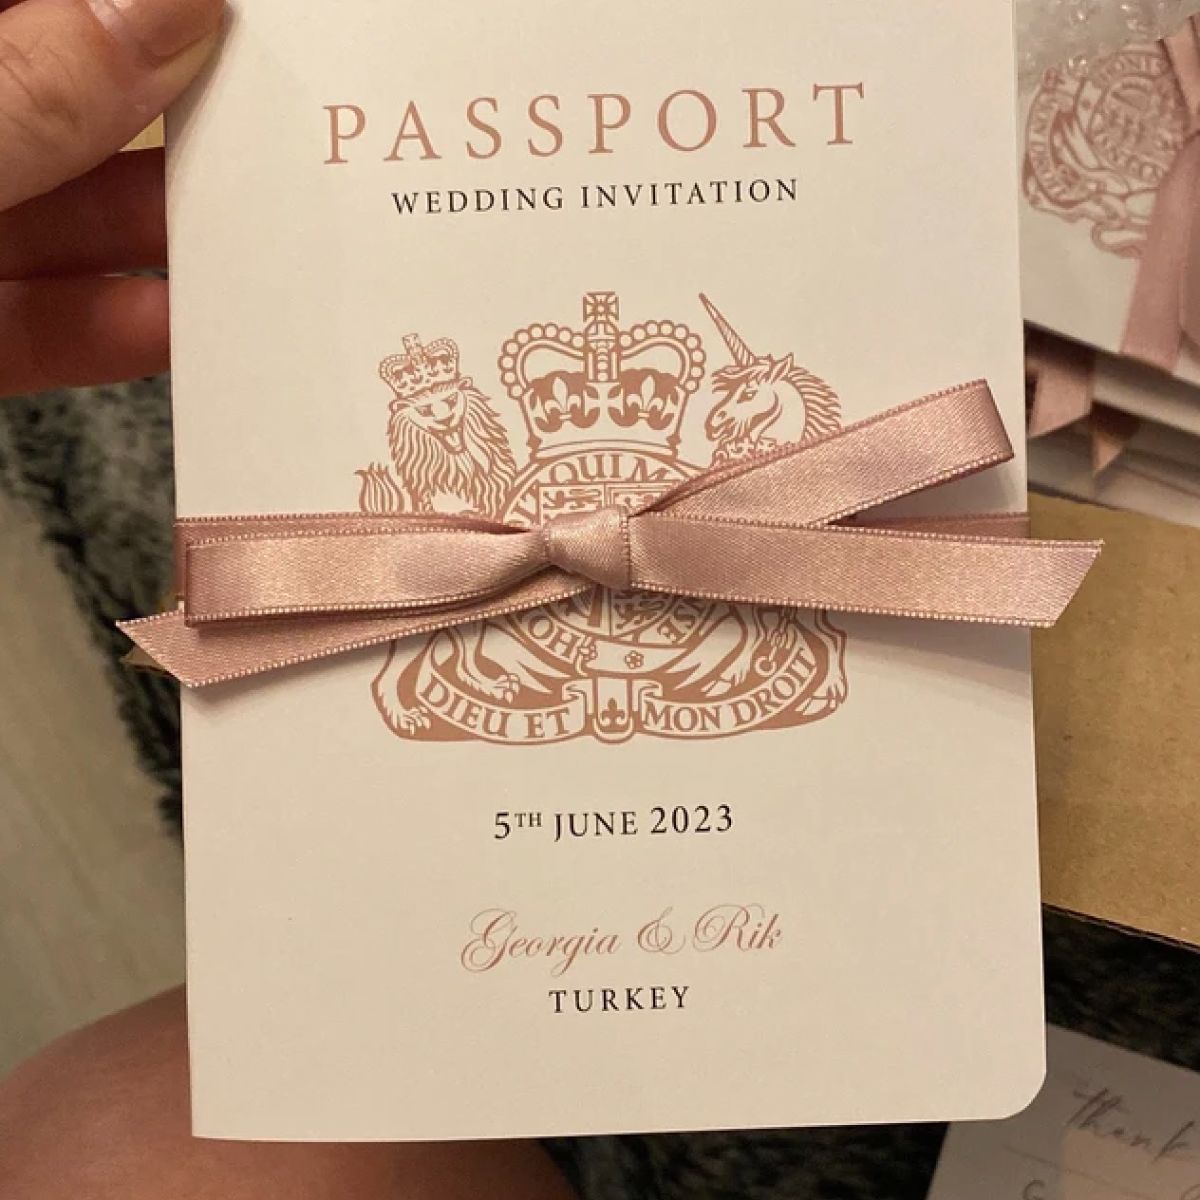 Passport invitations in beautiful rose gold